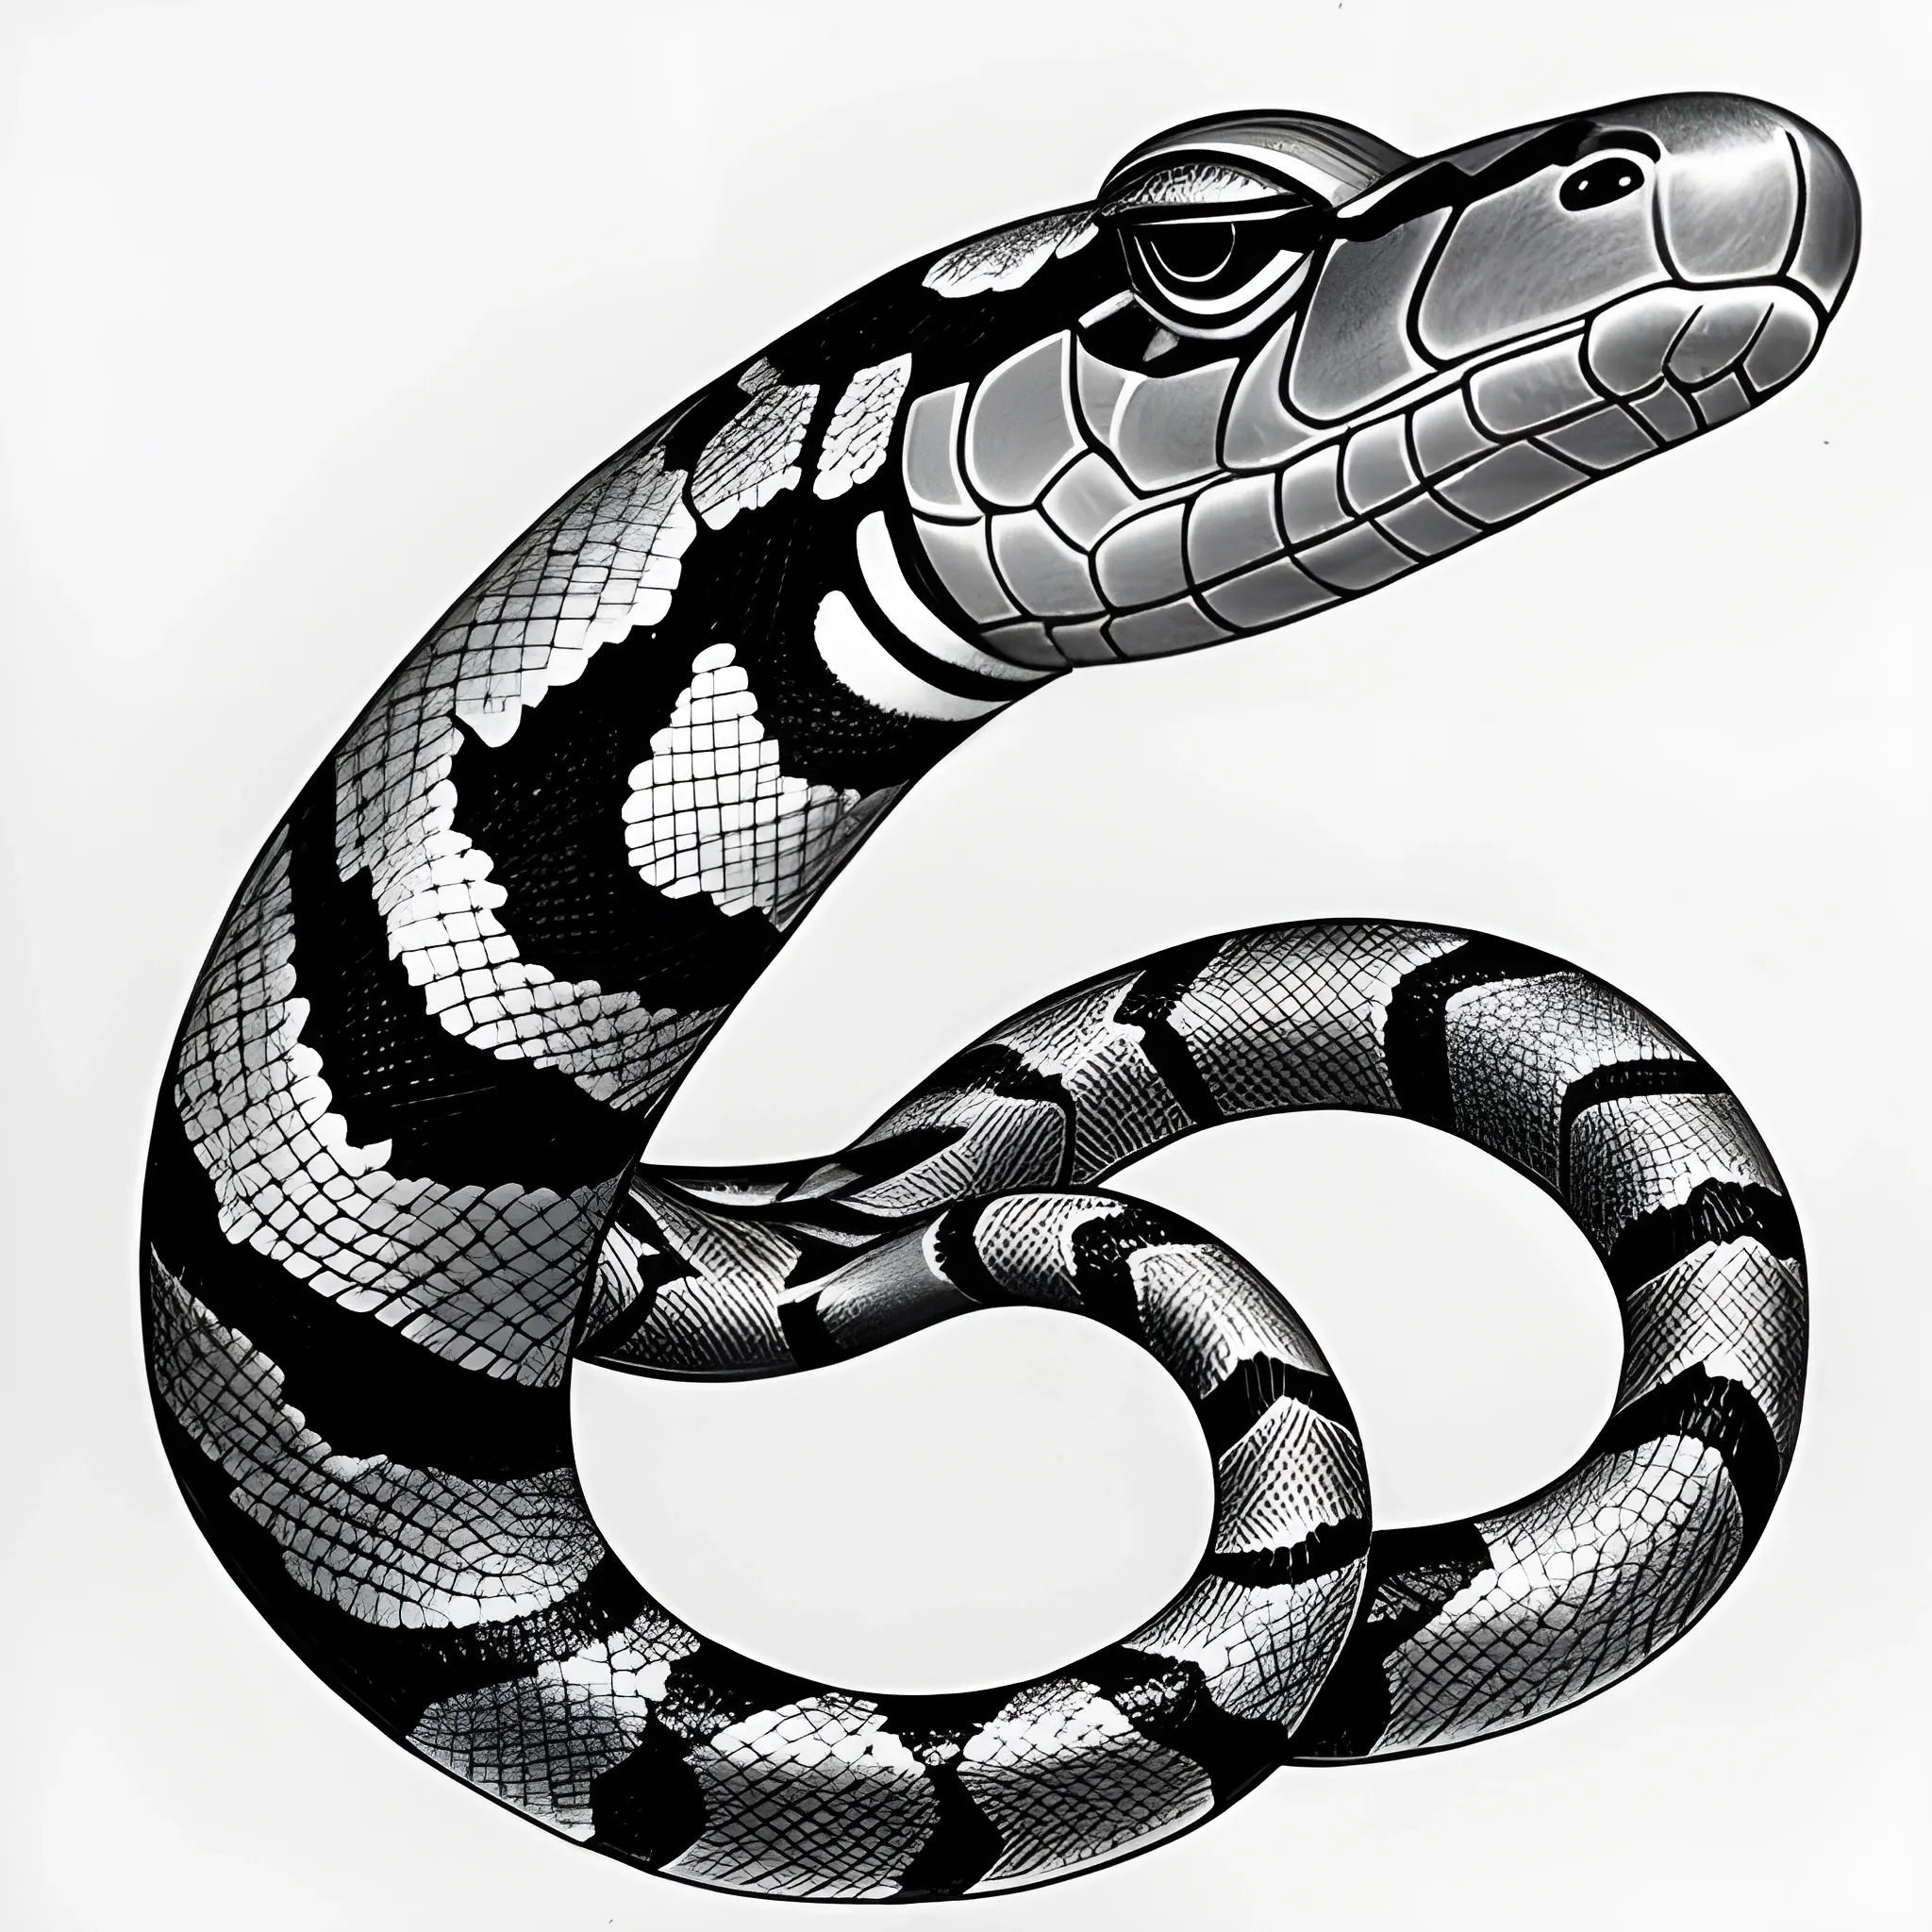 The Parvan - Very easy snake Drawing, video uploaded on YouTube link here  https://youtu.be/wqfxP3UMS08 #snake #snakes #snaketattoo #theparvan |  Facebook